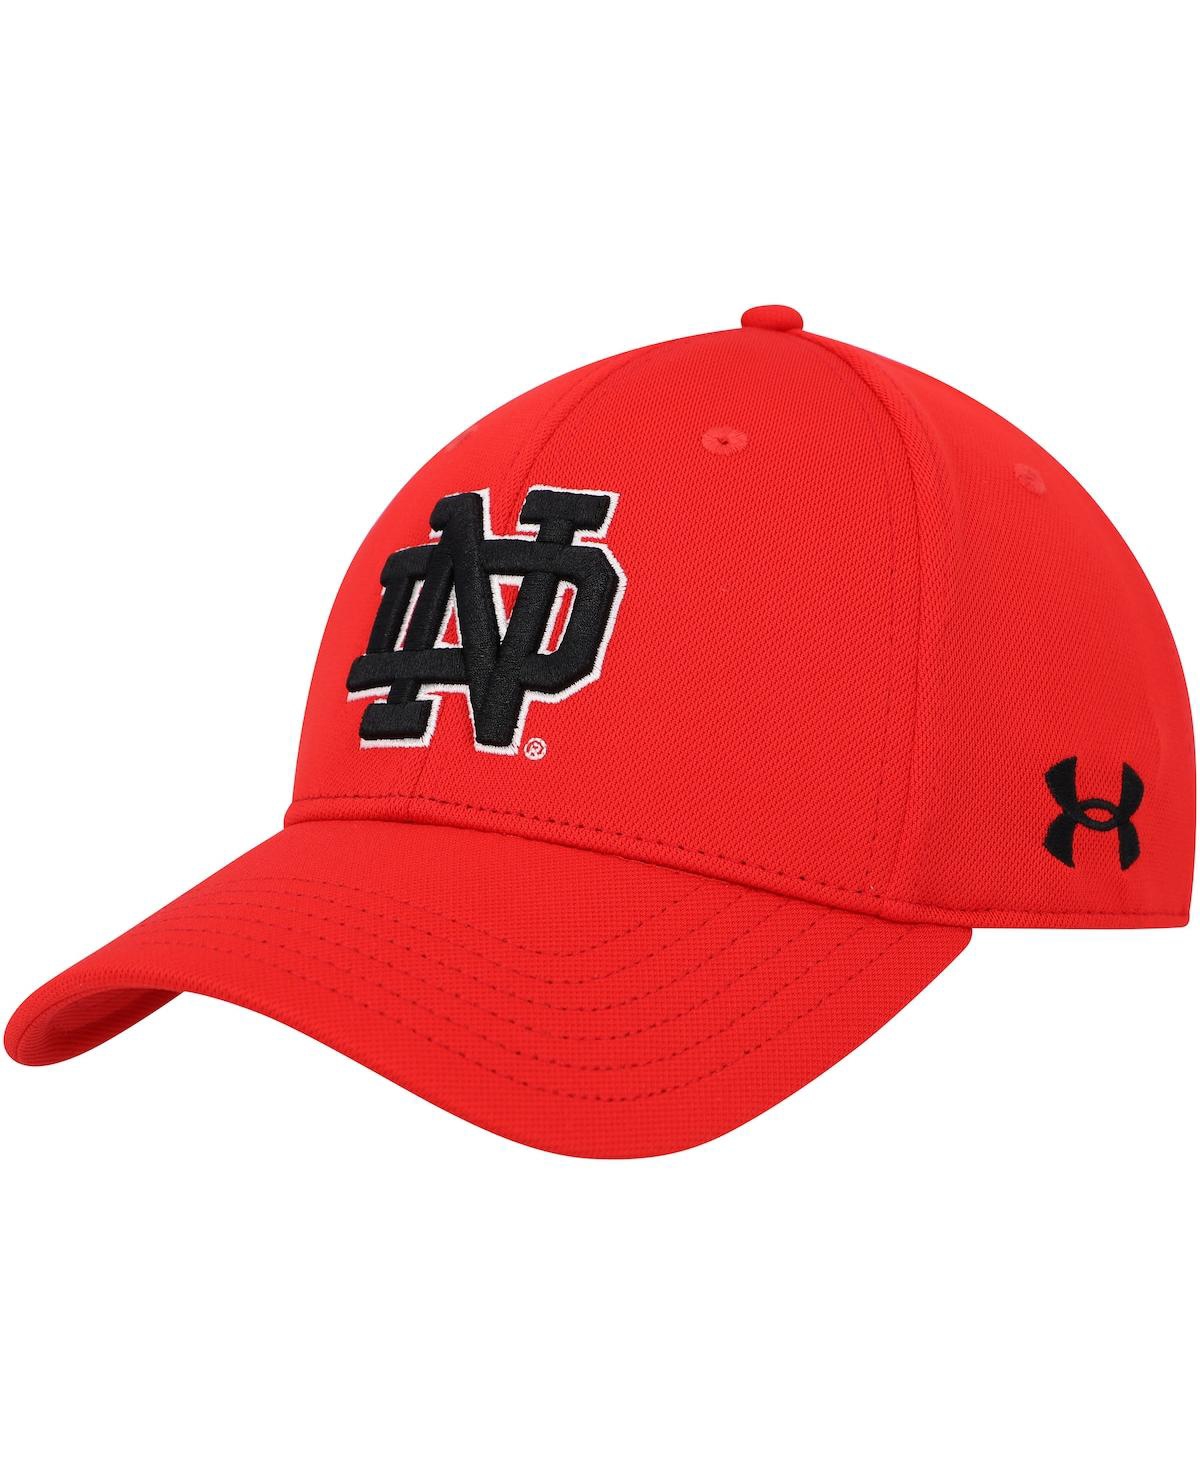 Under Armour Men's  Red Notre Dame Fighting Irish Signal Caller Performance Adjustable Hat